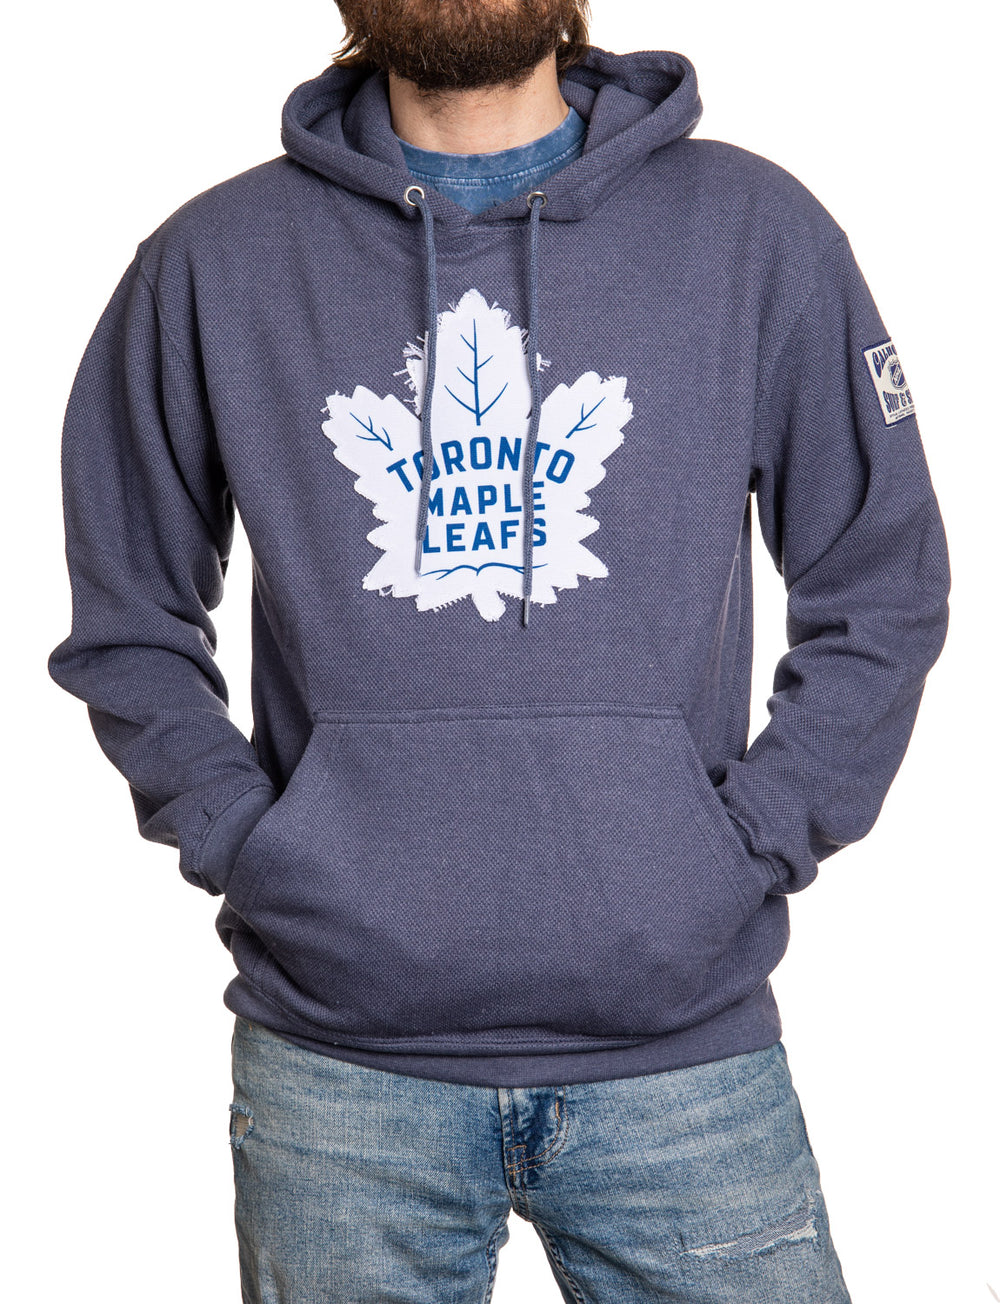 Get Go Leafs Go Toronto Maple Leafs Shirt For Free Shipping • PodXmas